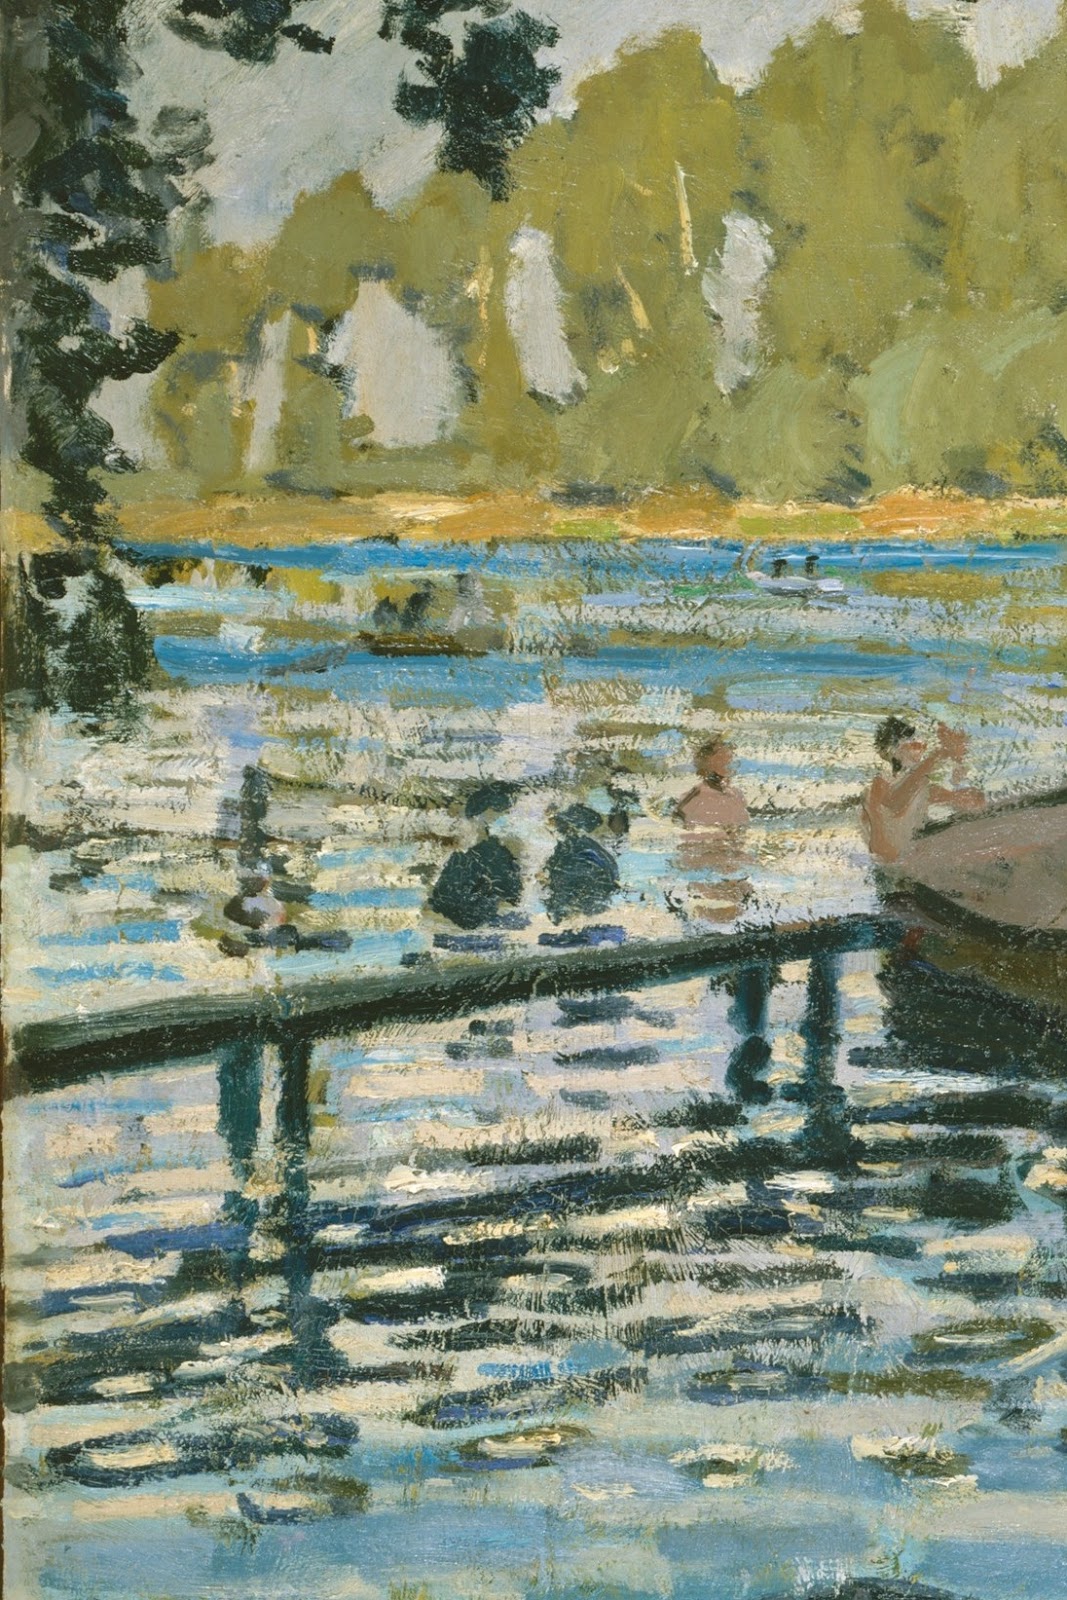 Claude+Monet-1840-1926 (1065).jpg